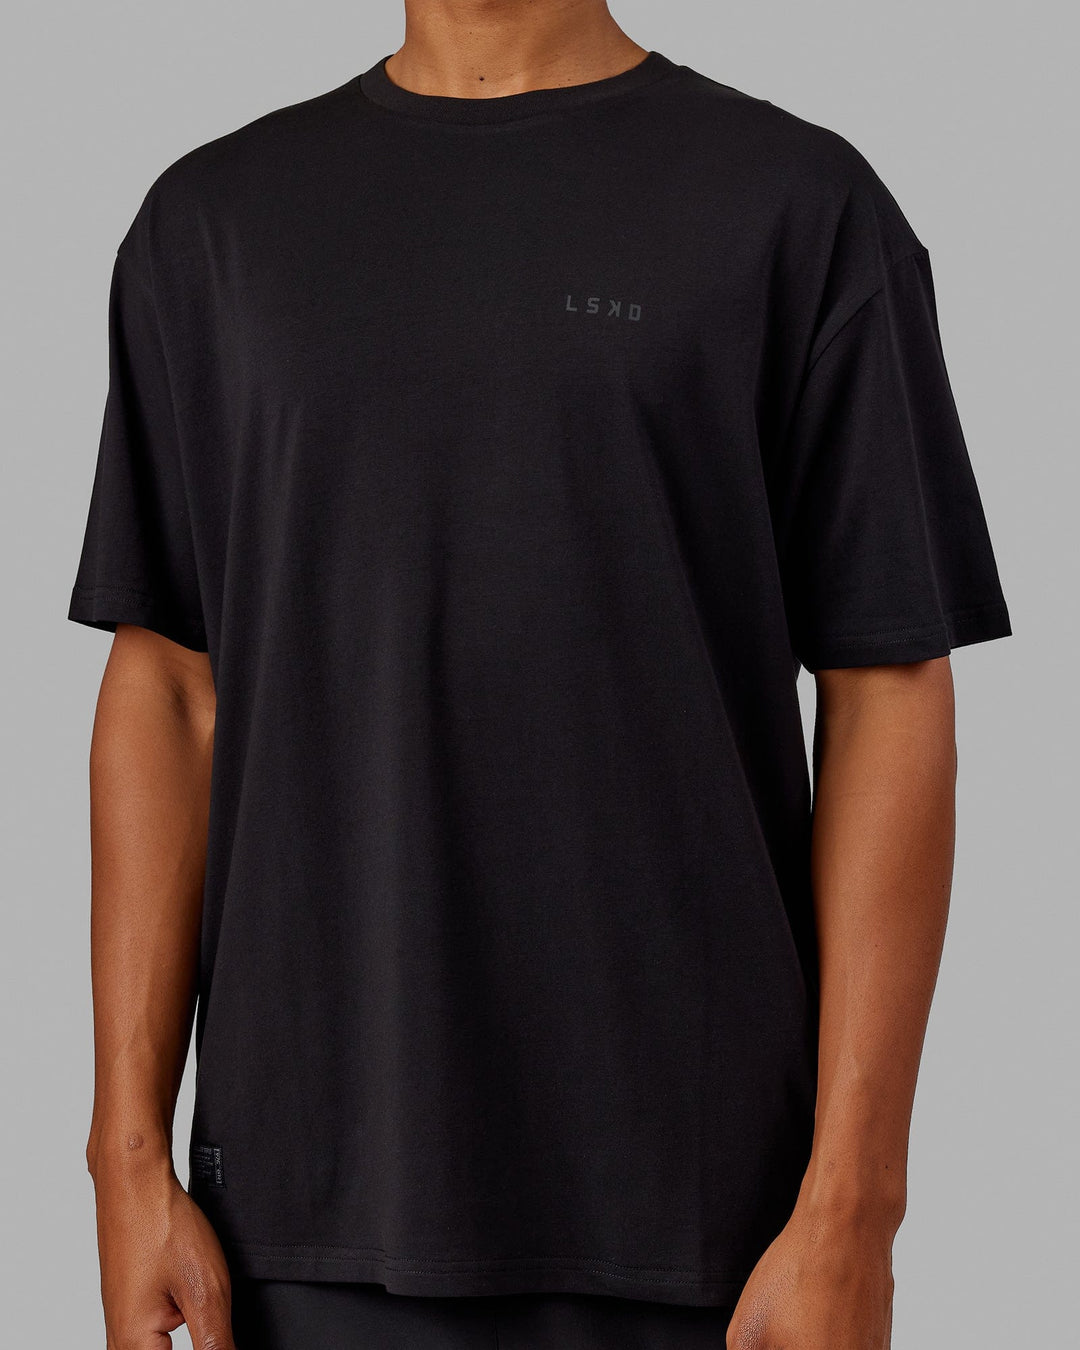 Man wearing Unisex VS5 FLXCotton Tee Oversize - Black-Black